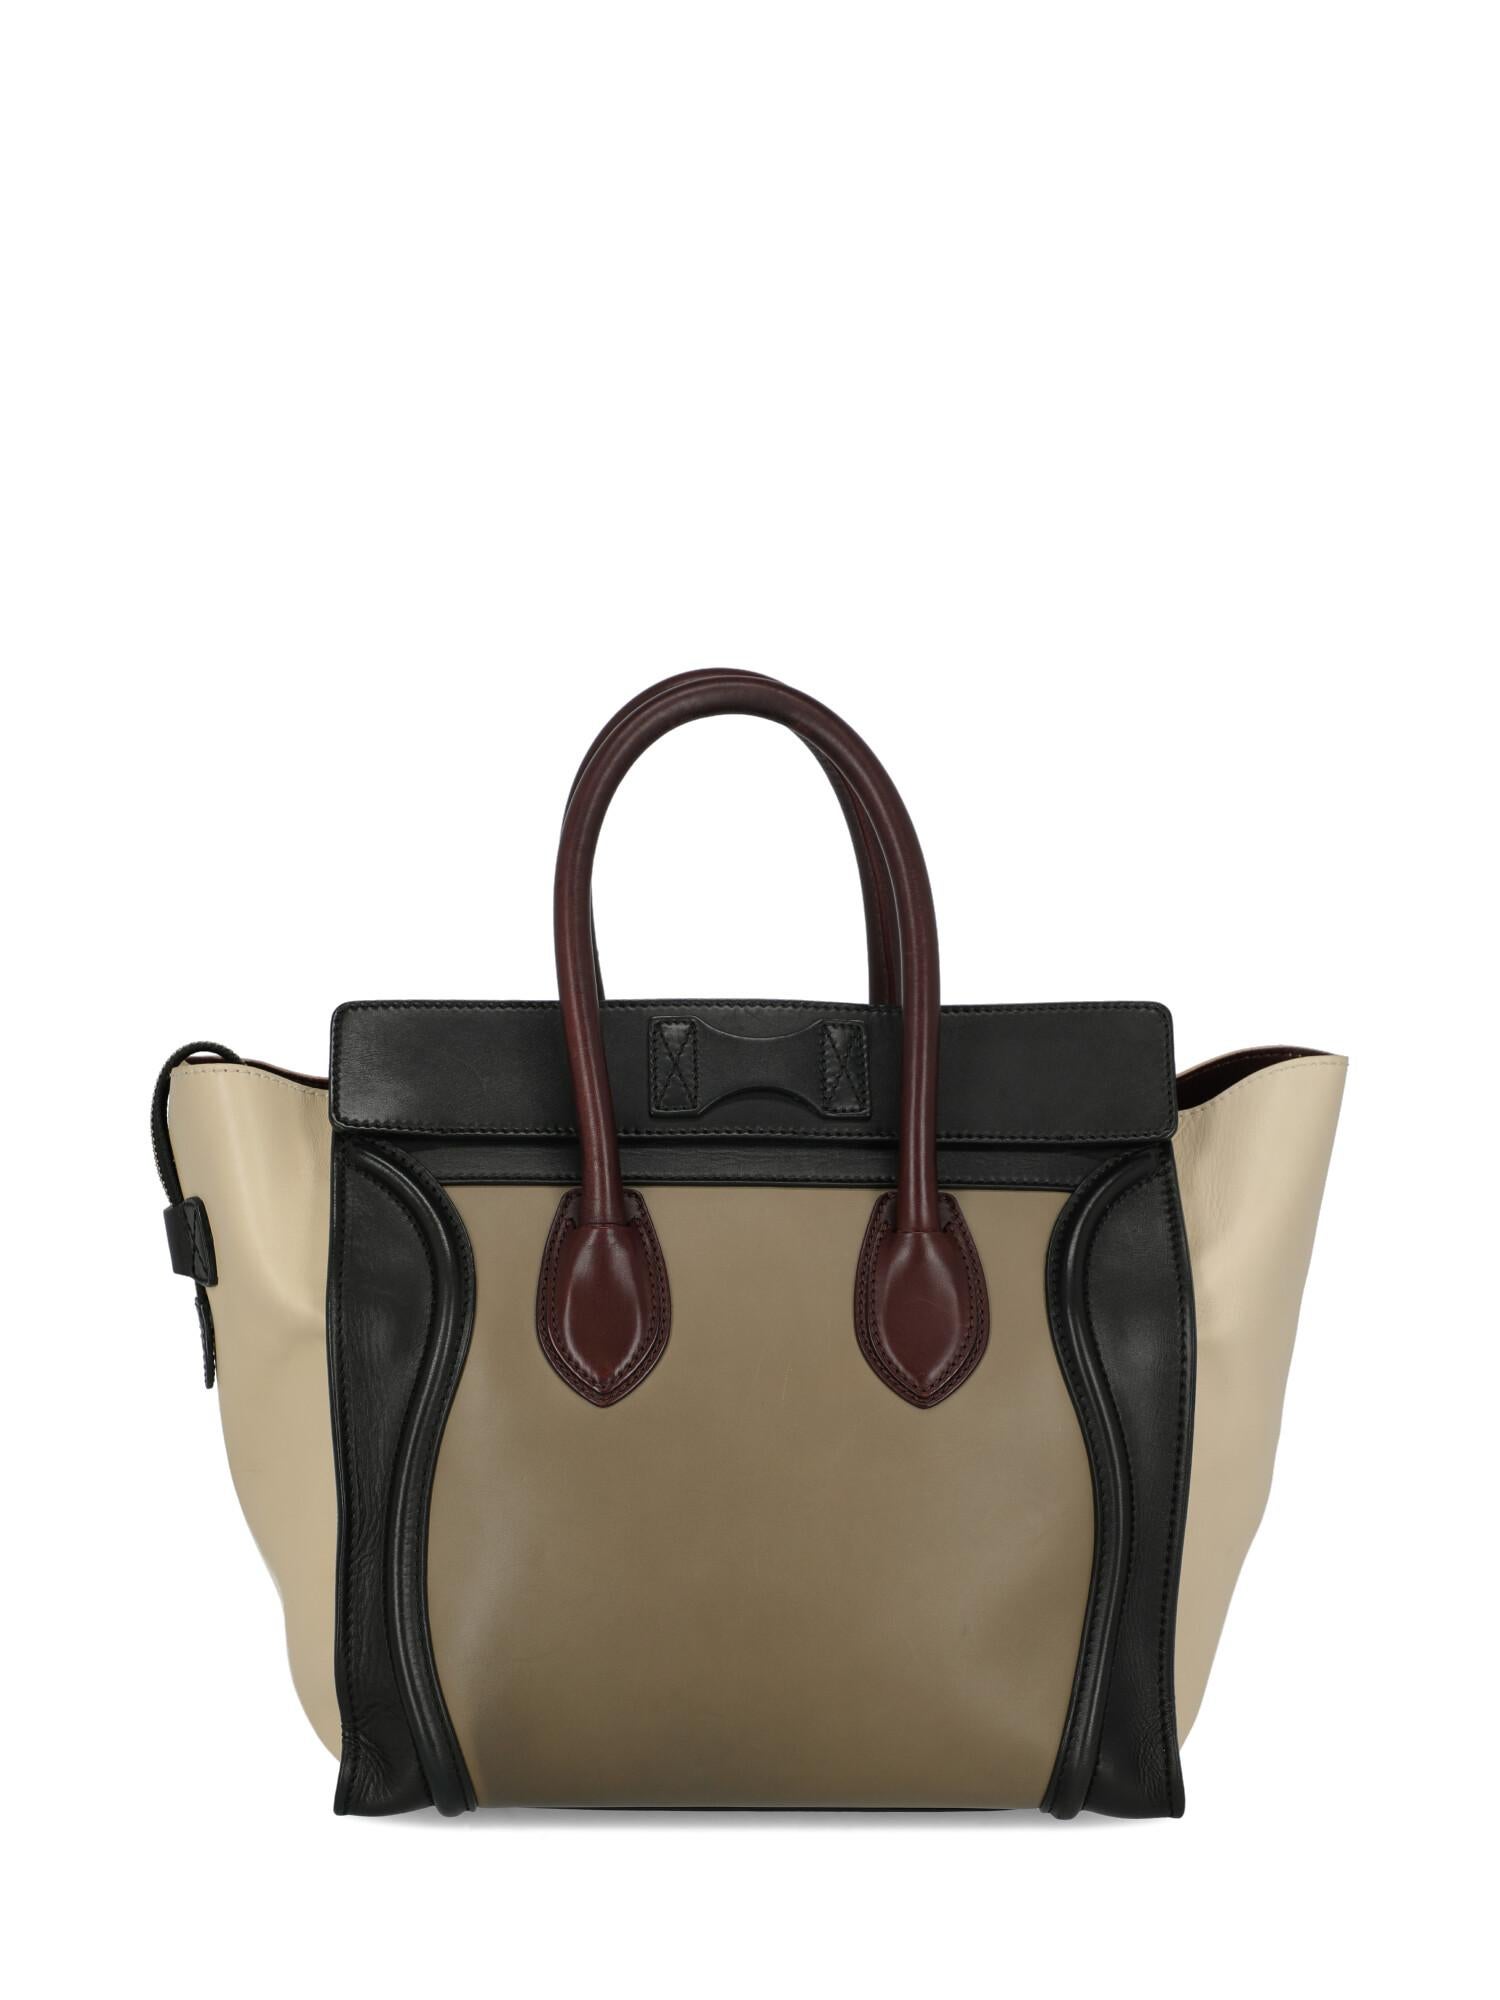 Celine Women's Luggage Black/Burgundy/Ecru Leather For Sale 1